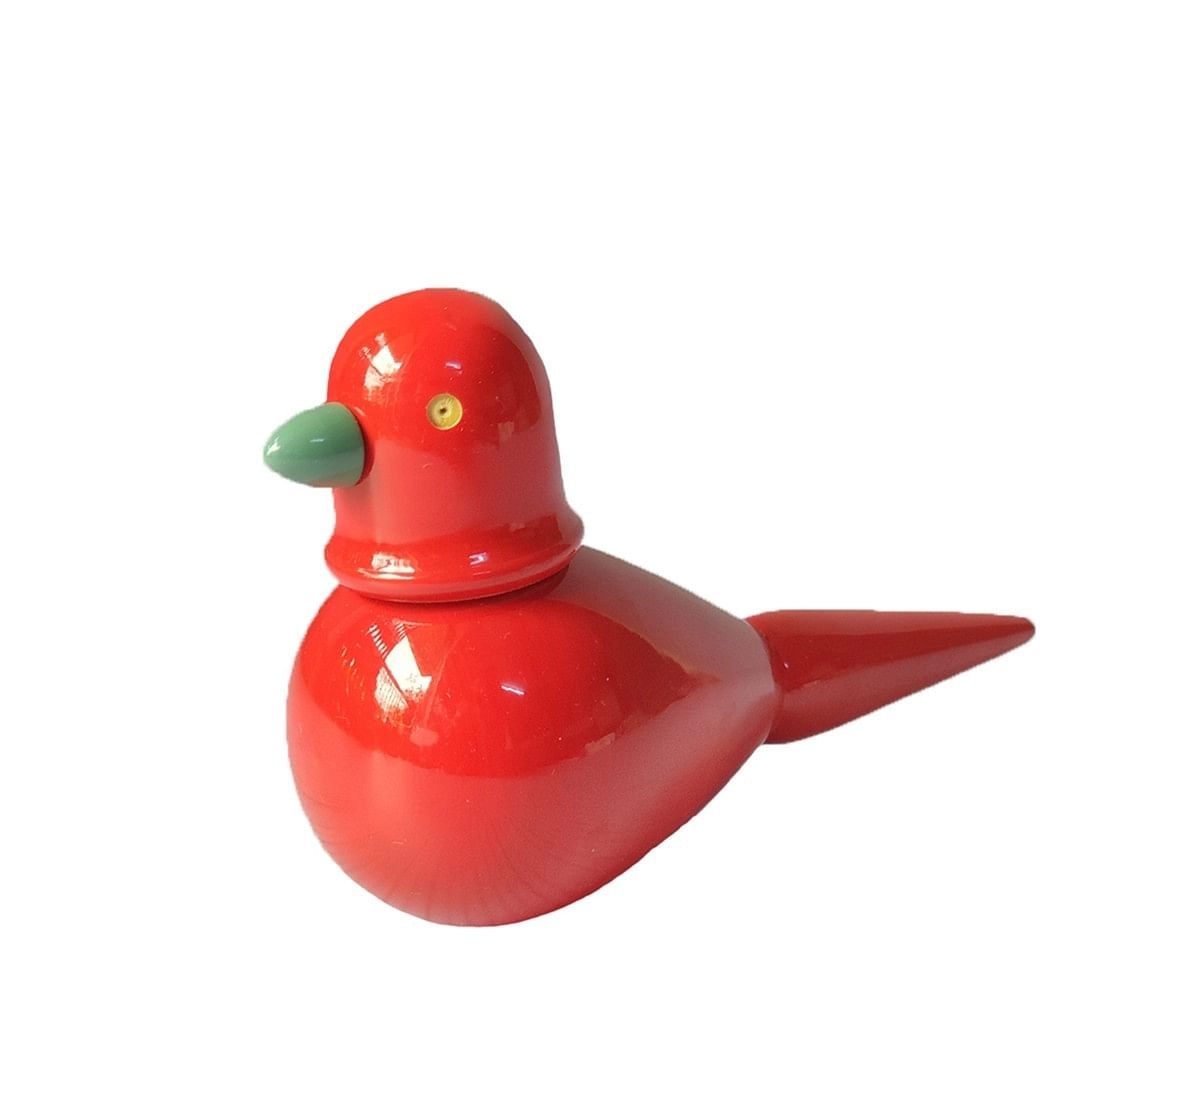 Nurture India Wooden Bird Figurines Red Wooden Toys for Kids age 12M+ (Red)